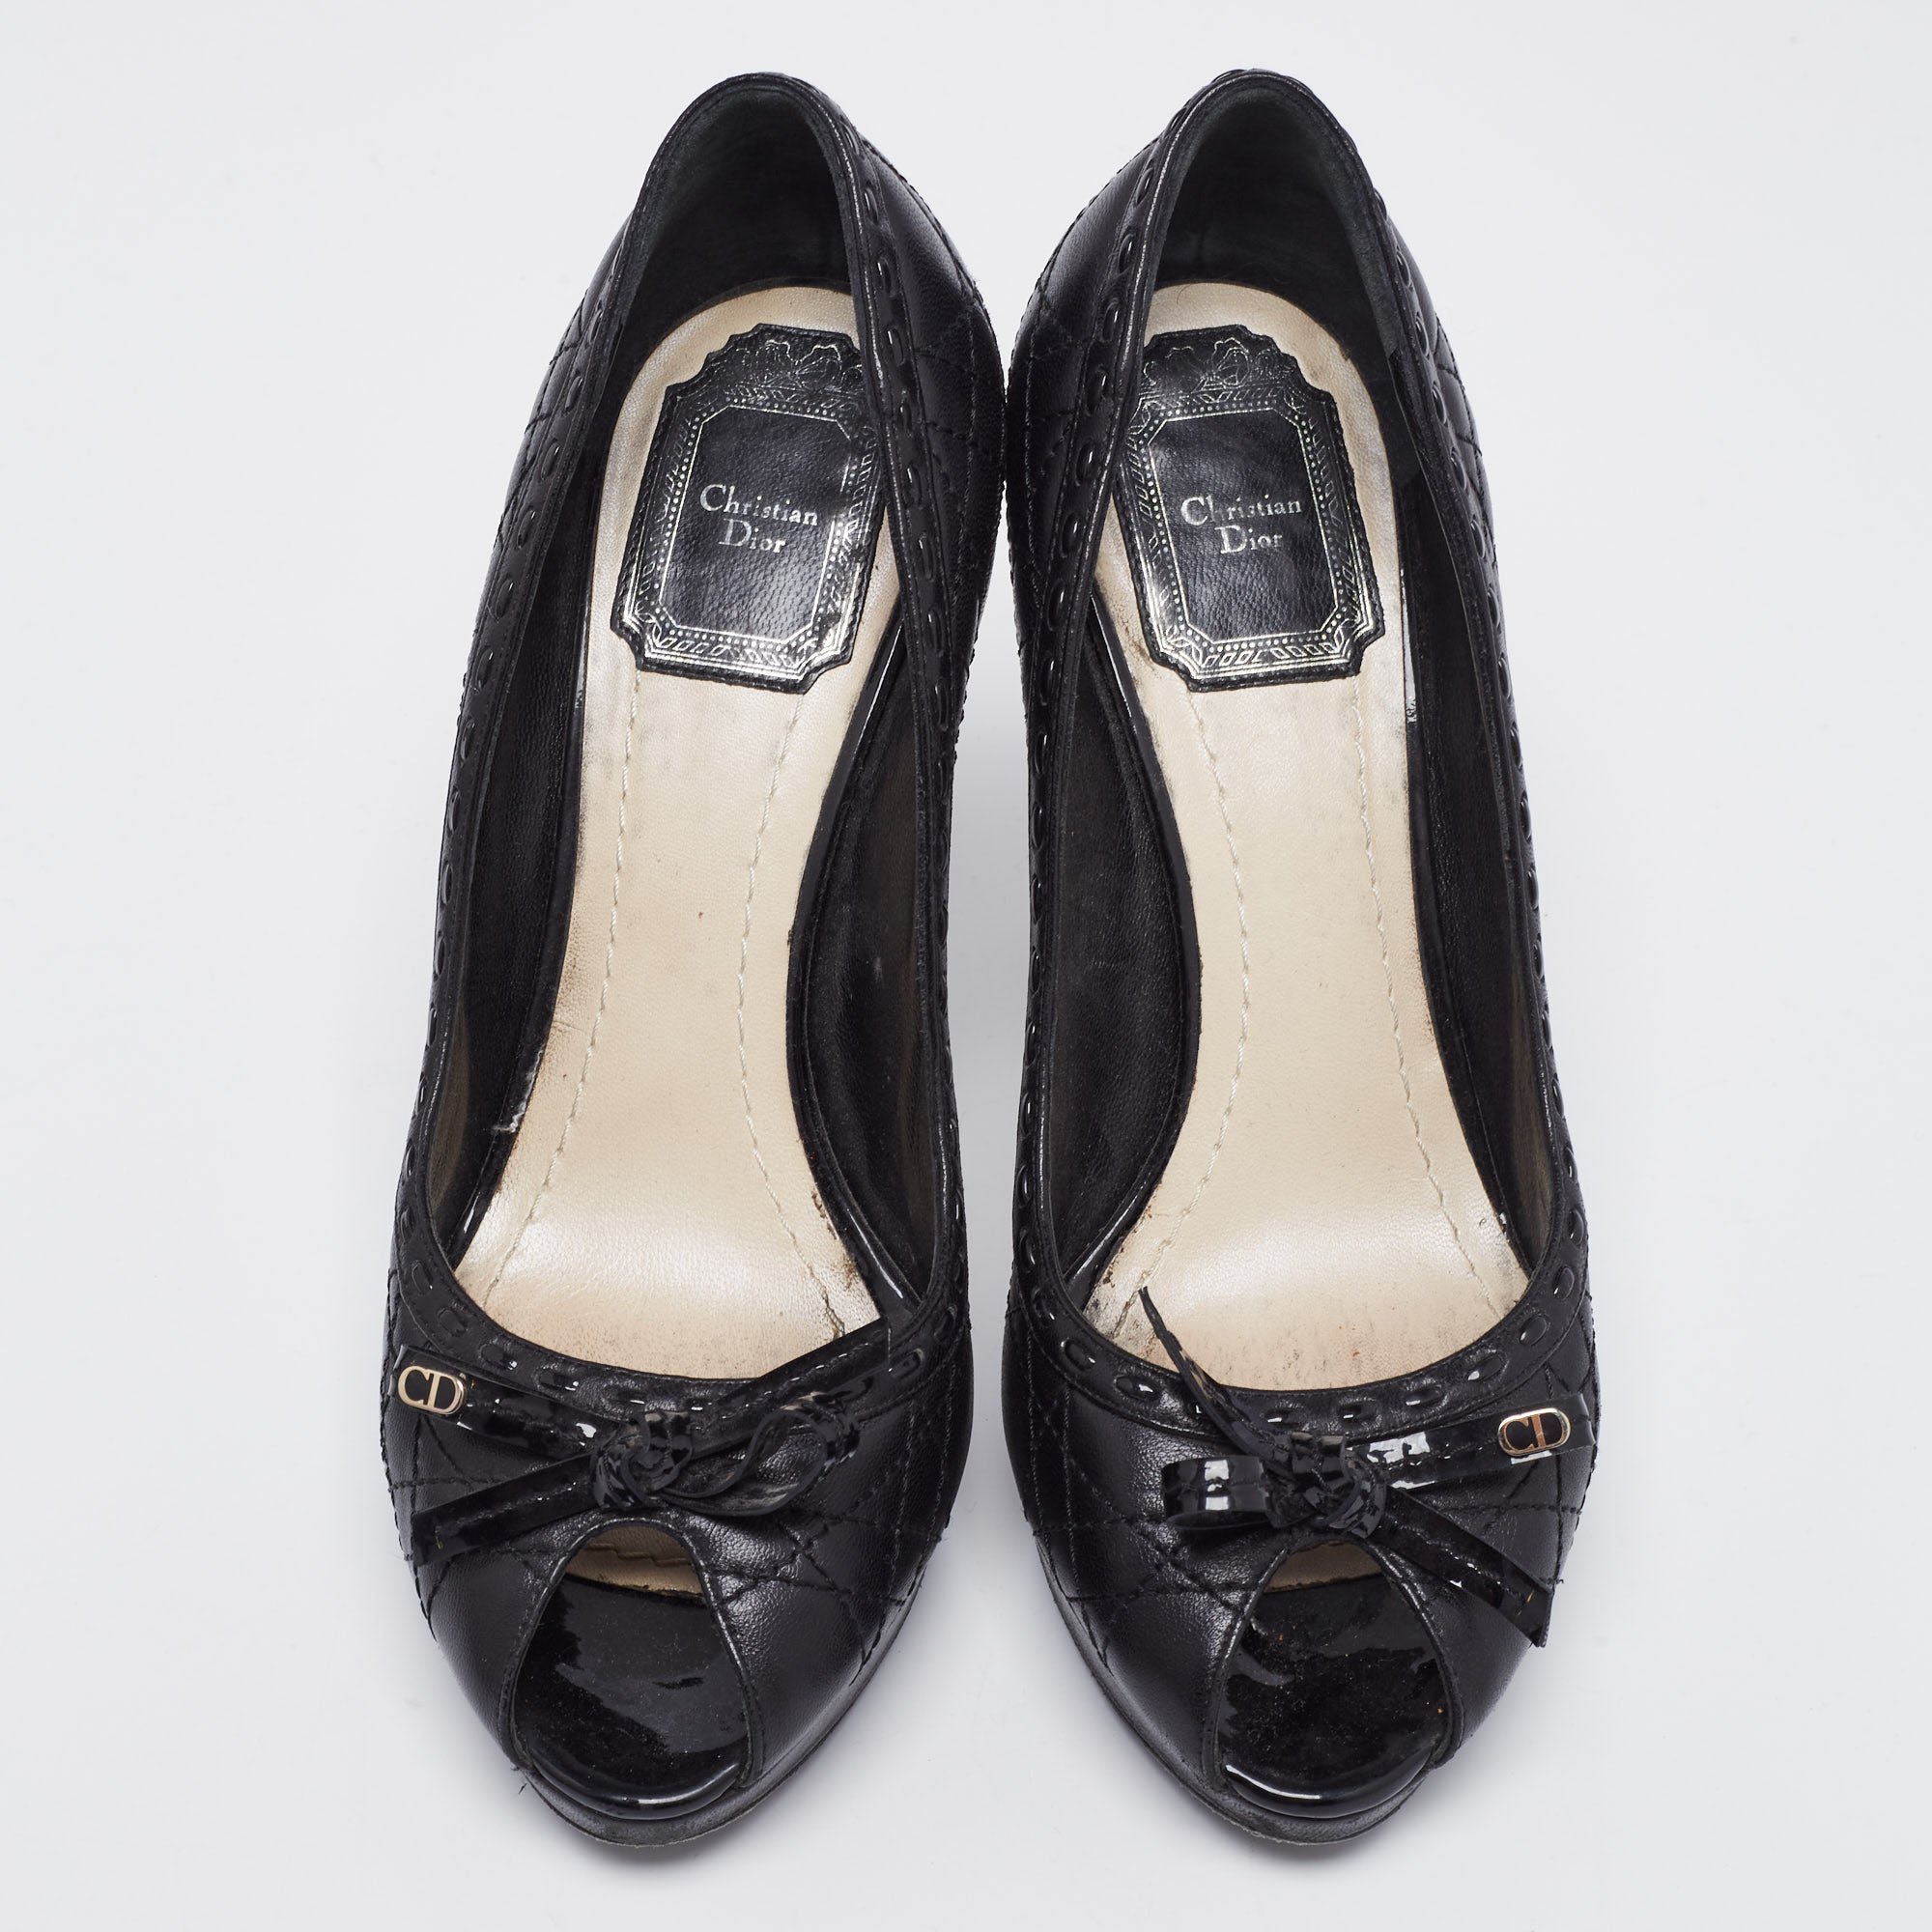 Dior Black Cannage Leather Bow Peep-Toe Pumps Size 37